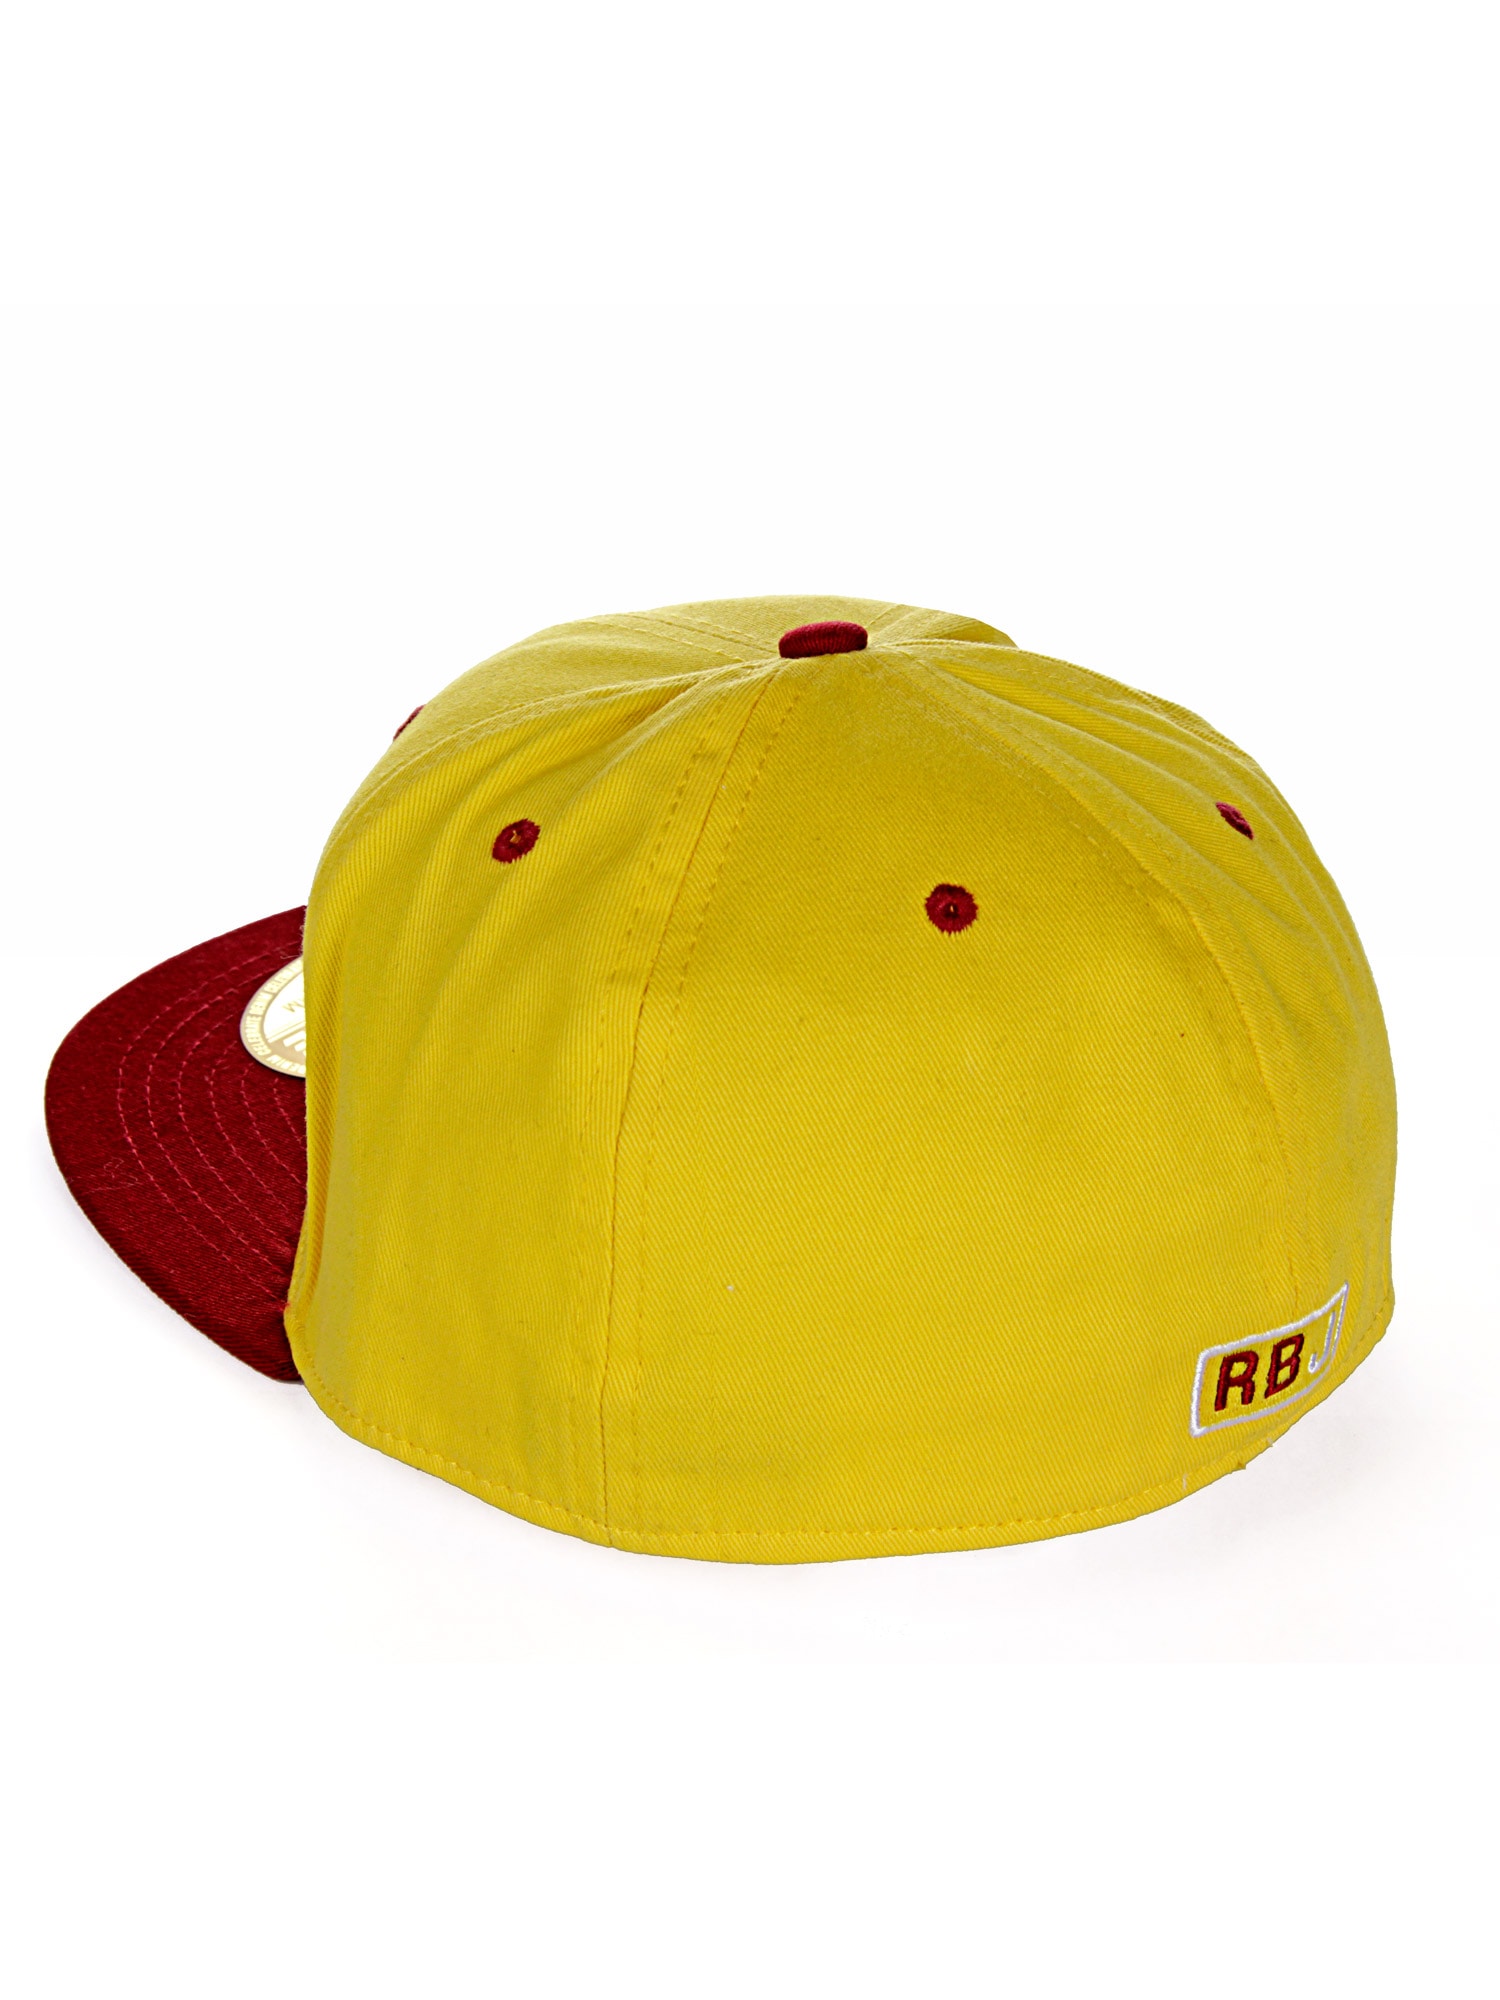 RedBridge Baseball Cap »Durham« mit kontrastfarbigem Schirm